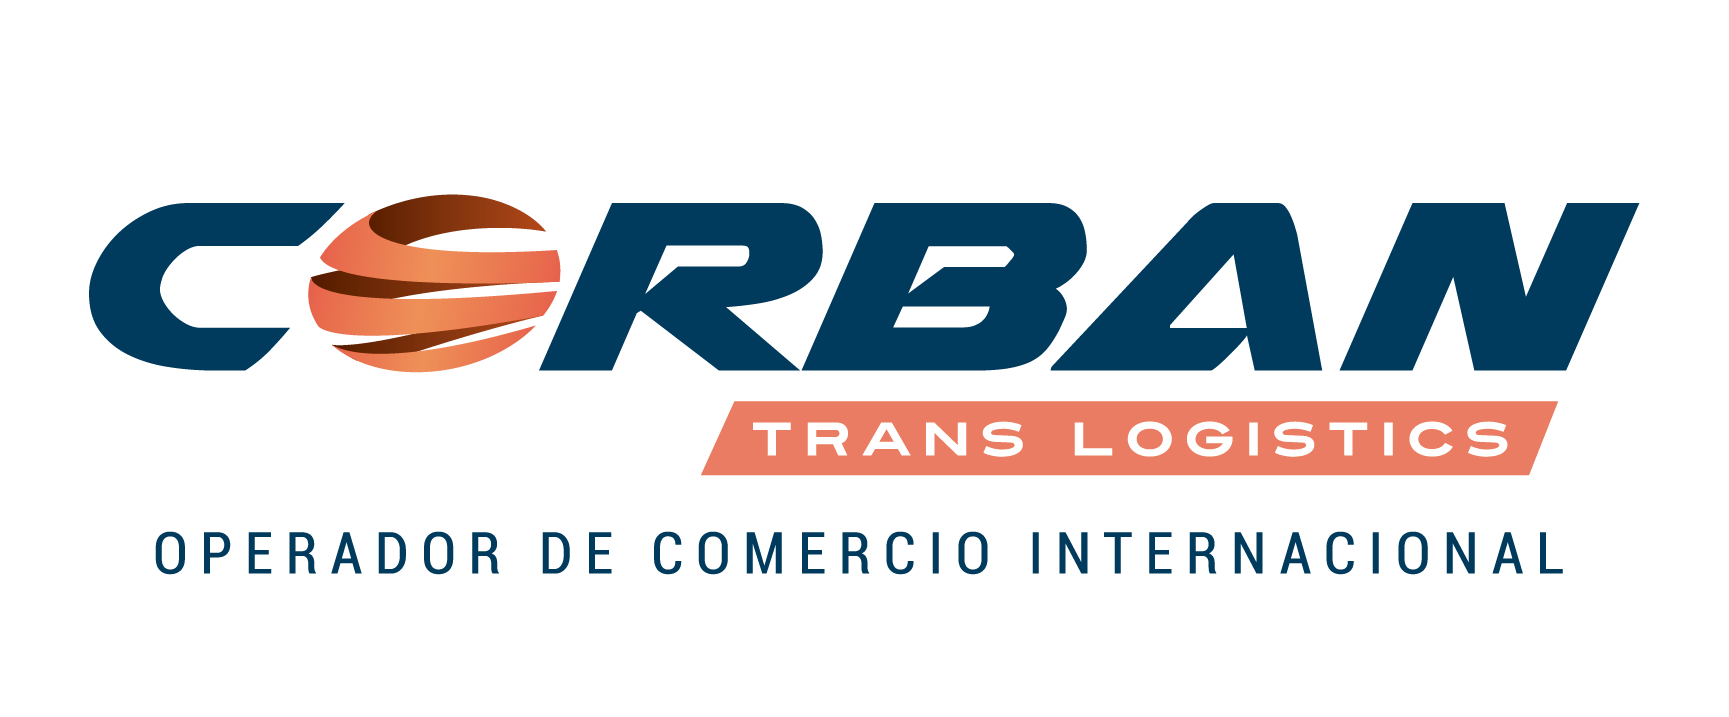 Corban Logo - Corban Trans